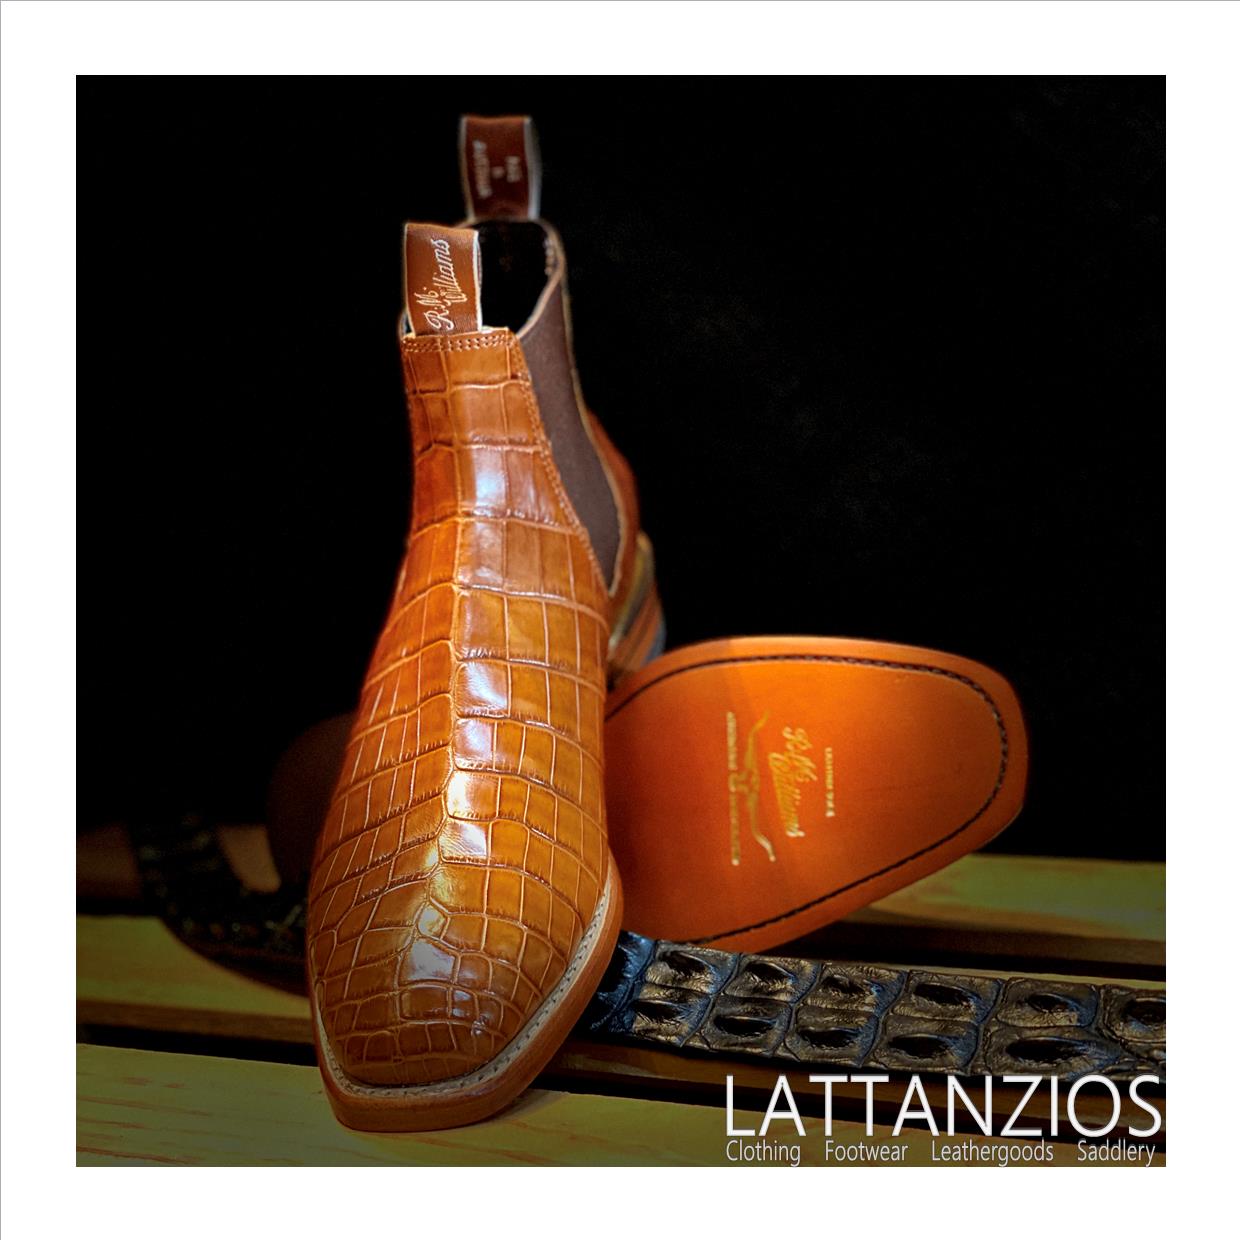 Lattanzios Clothing, Footwear, Leathergoods & Saddlery